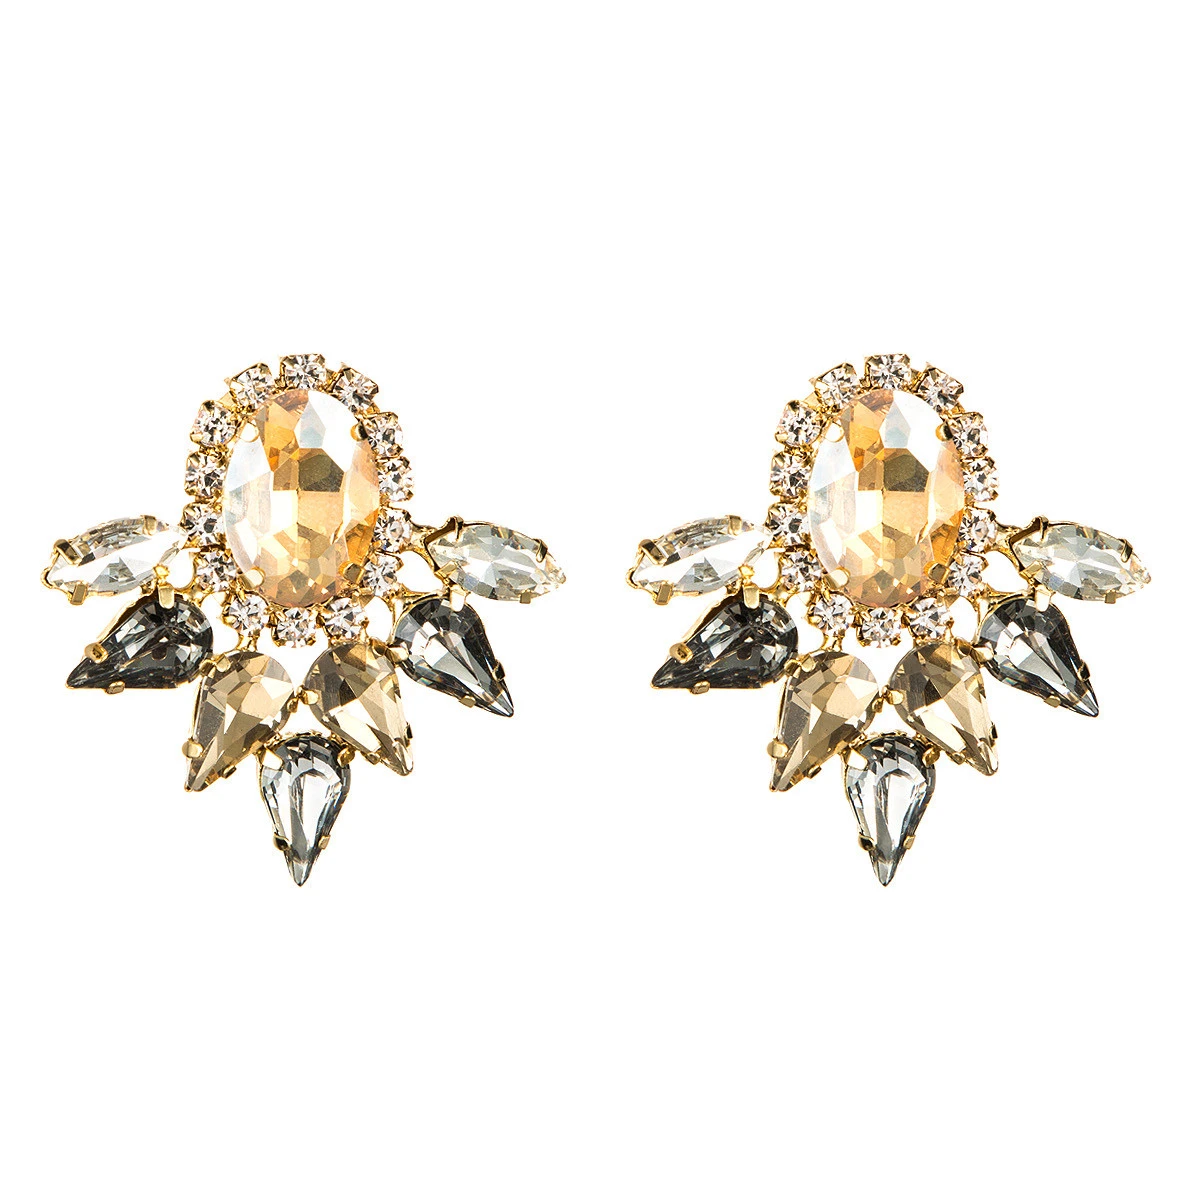 2020 new arrival gold women fashion jewelry style pendant acrylic earrings